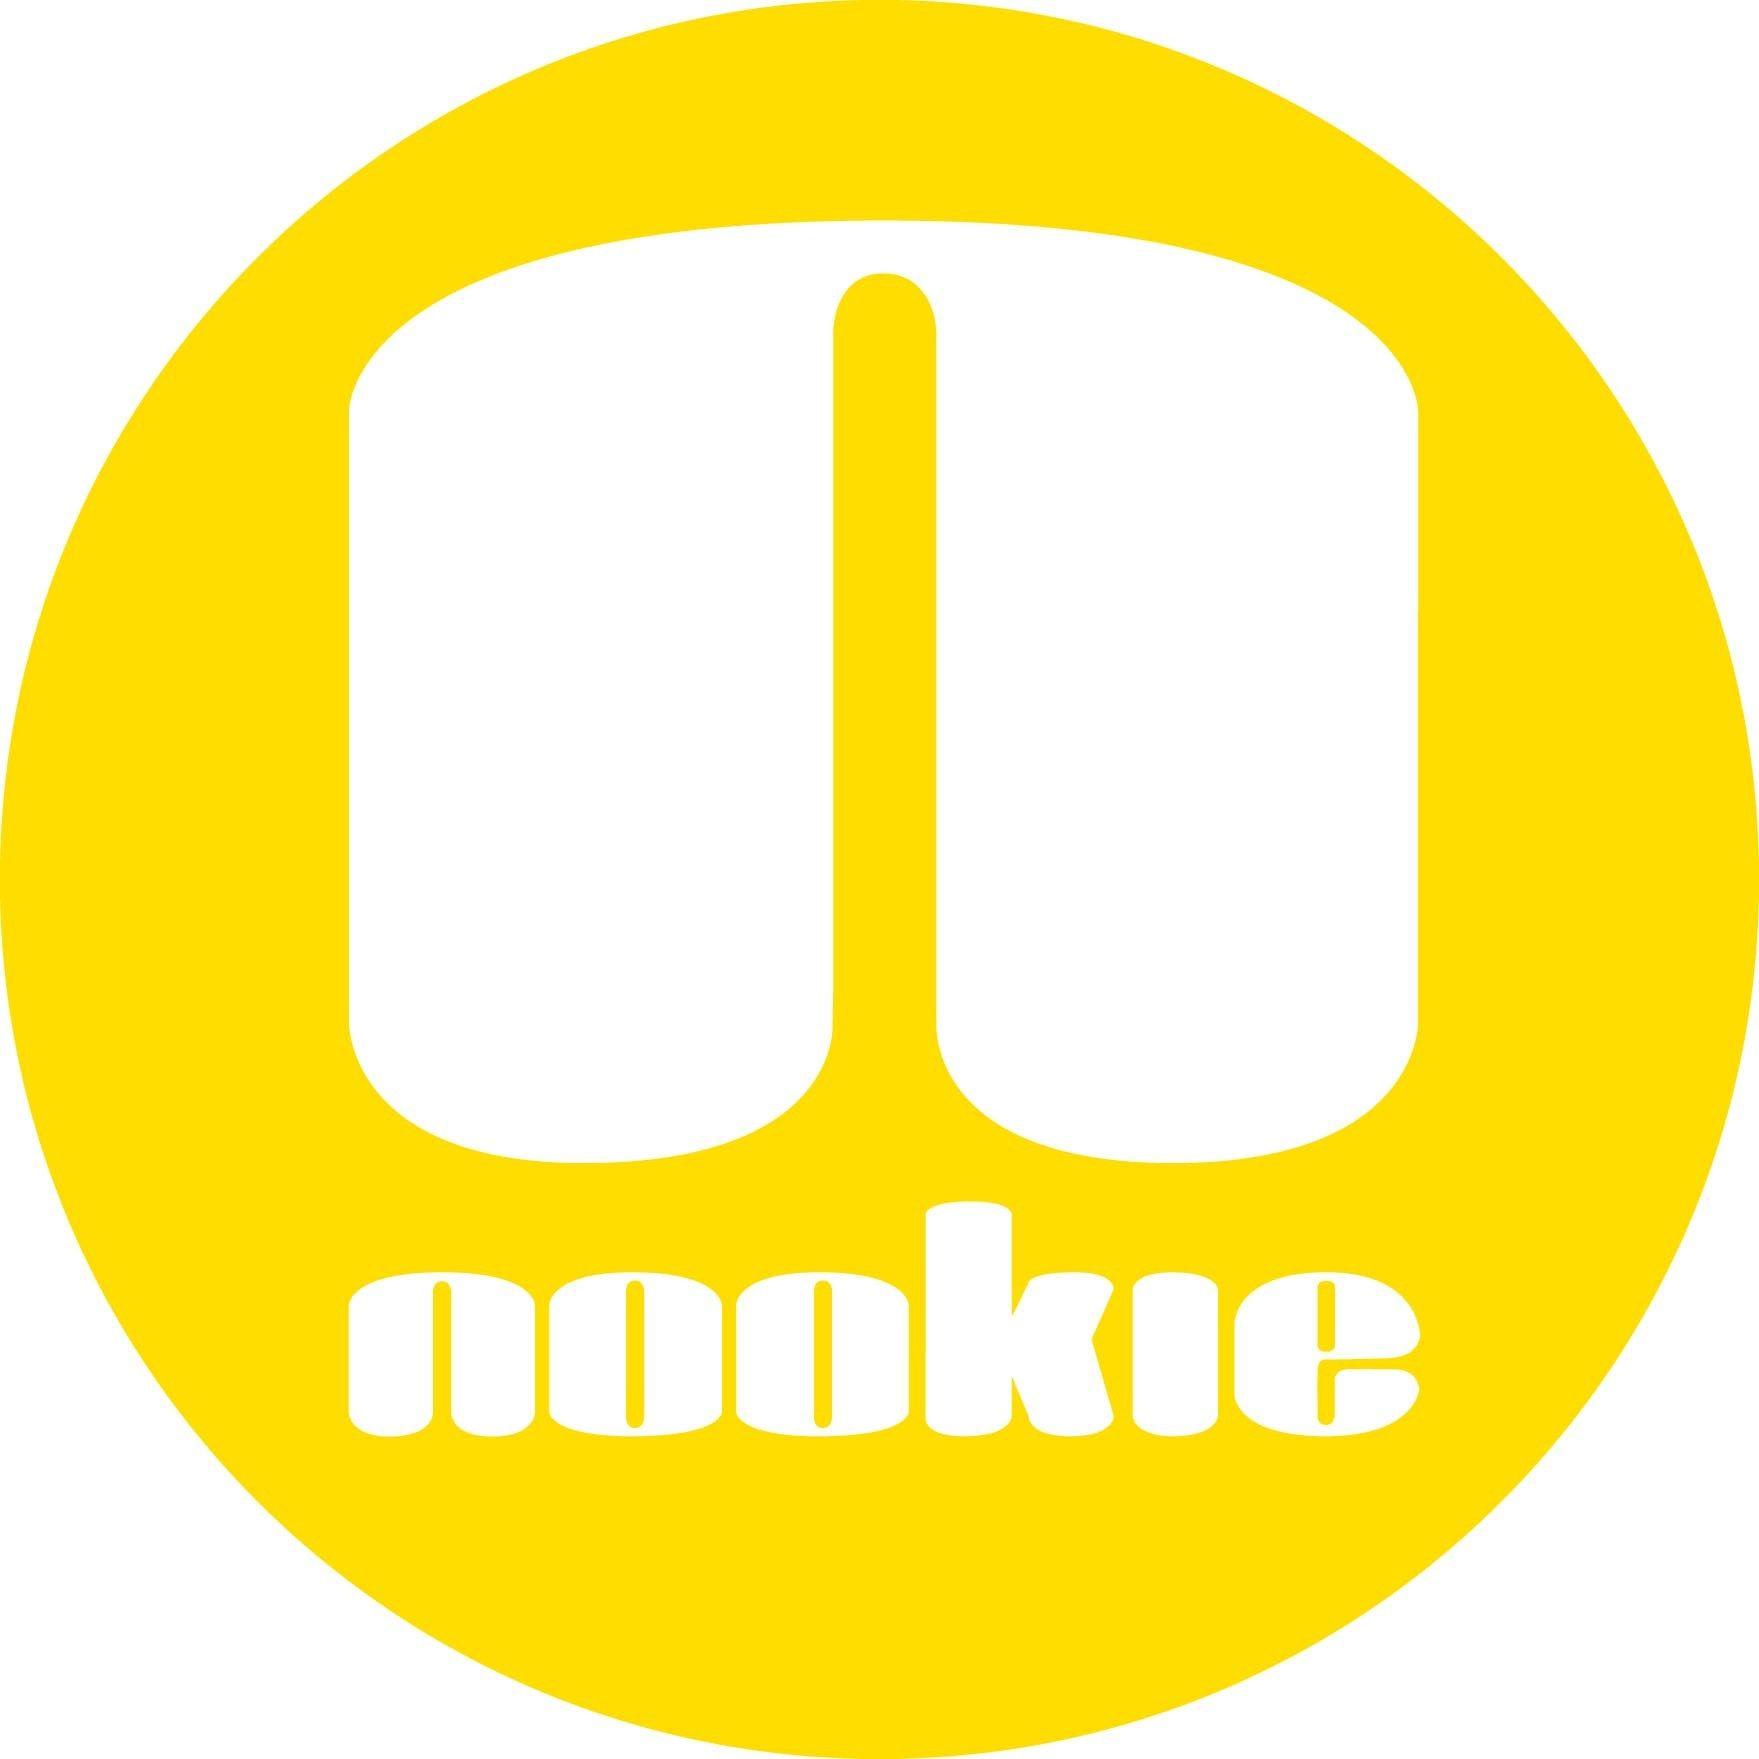 Starting with a Yellow Circle Logo - Nookie Logo Sticker - 15cm - Nookie